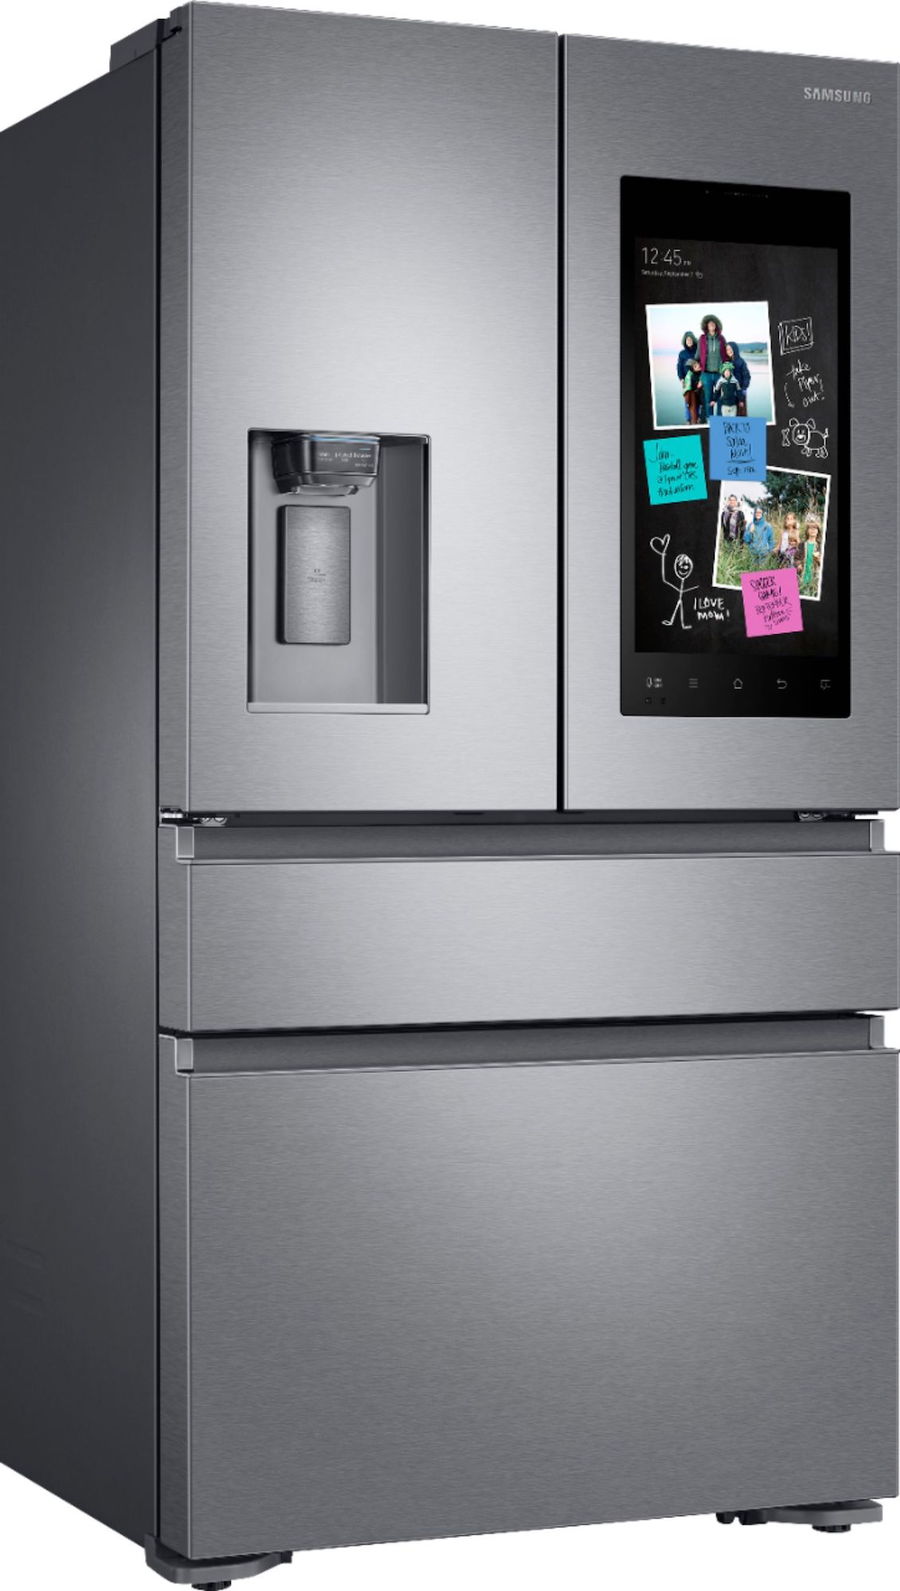 Samsung's Smart New Family Hub refrigerator. 